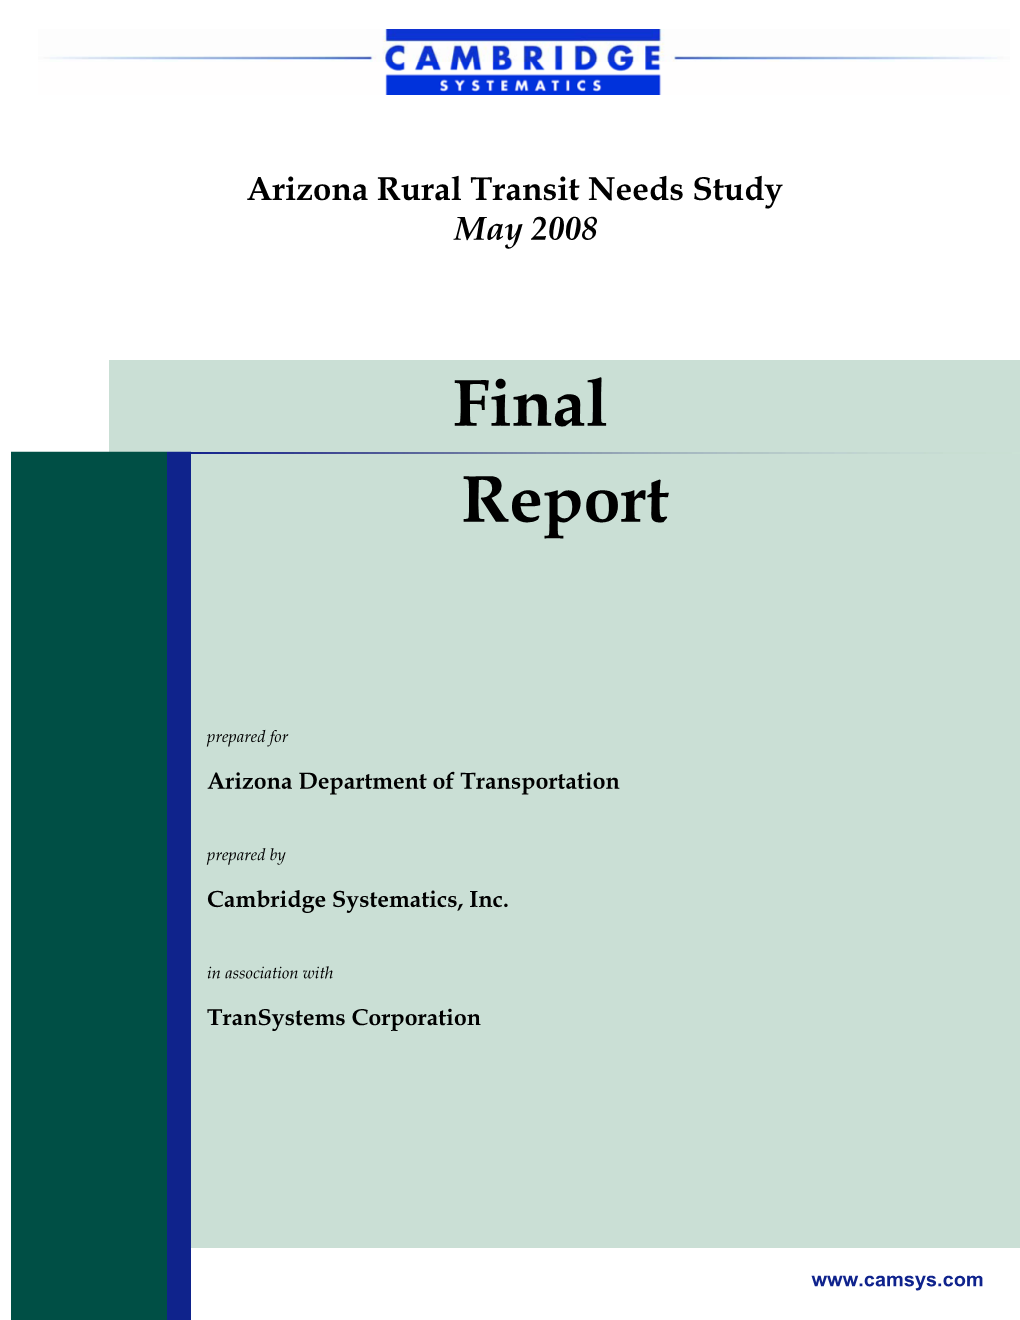 Arizona Rural Transit Needs Study May 2008